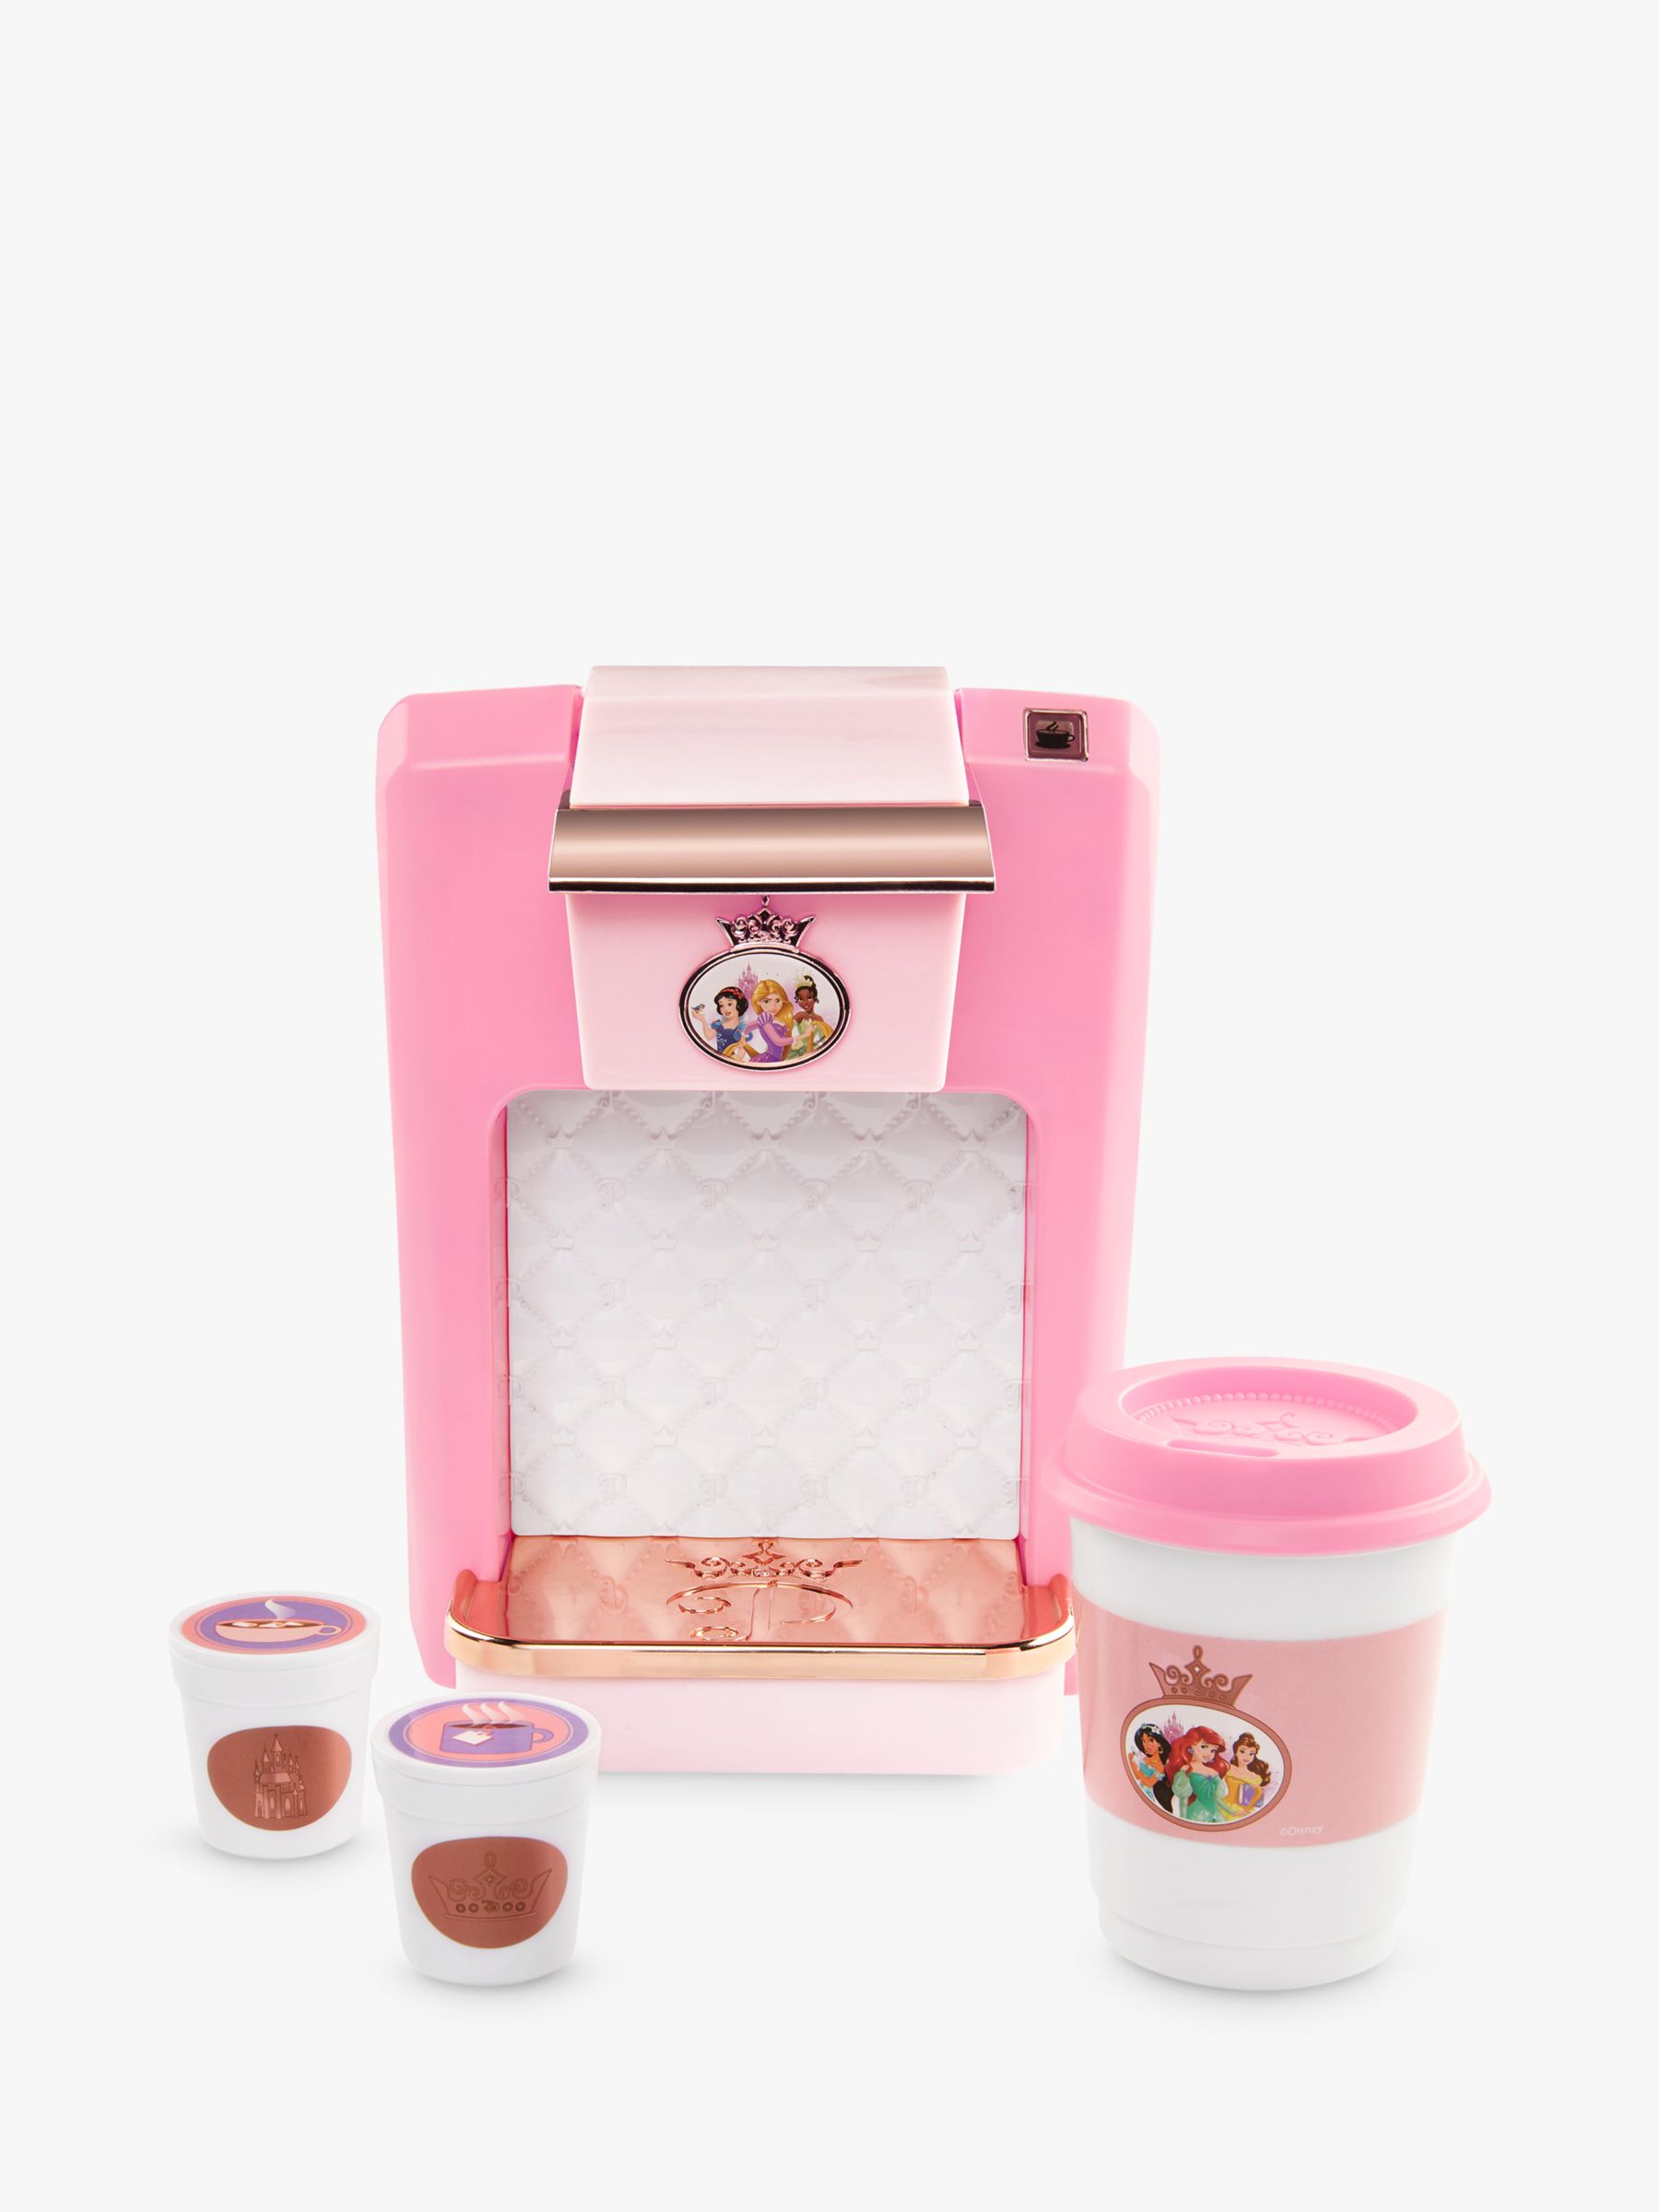 Disney Princess Toy Coffee Maker